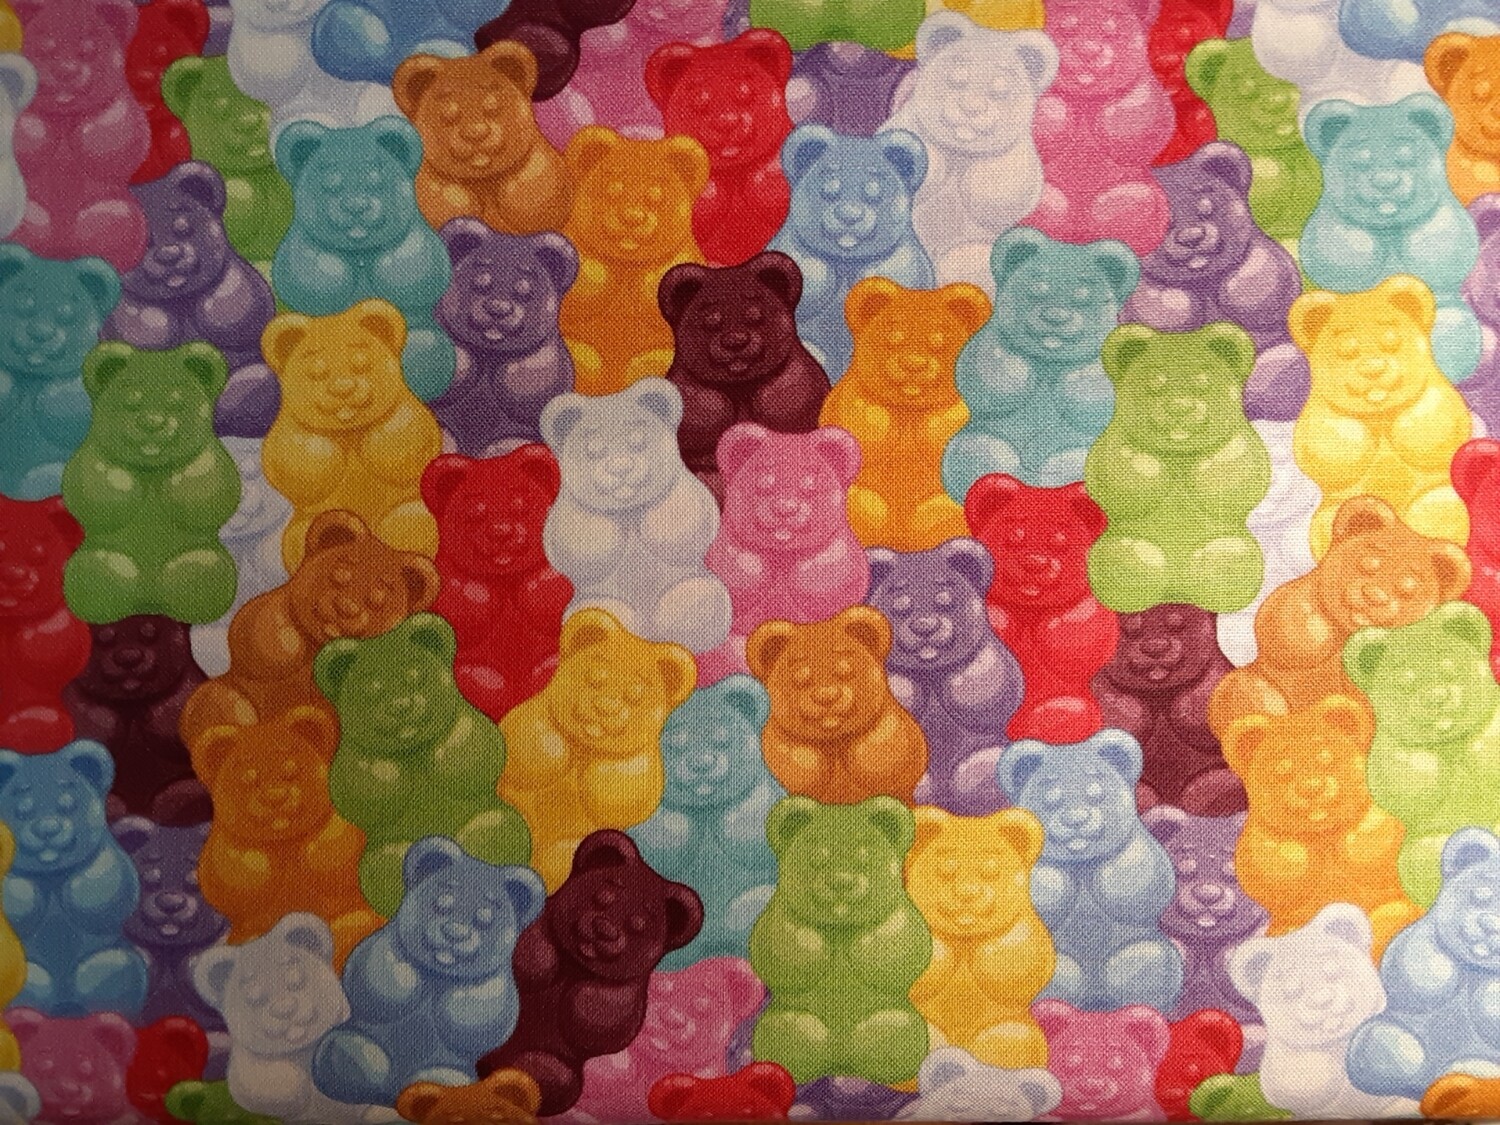 Gummy bears (9